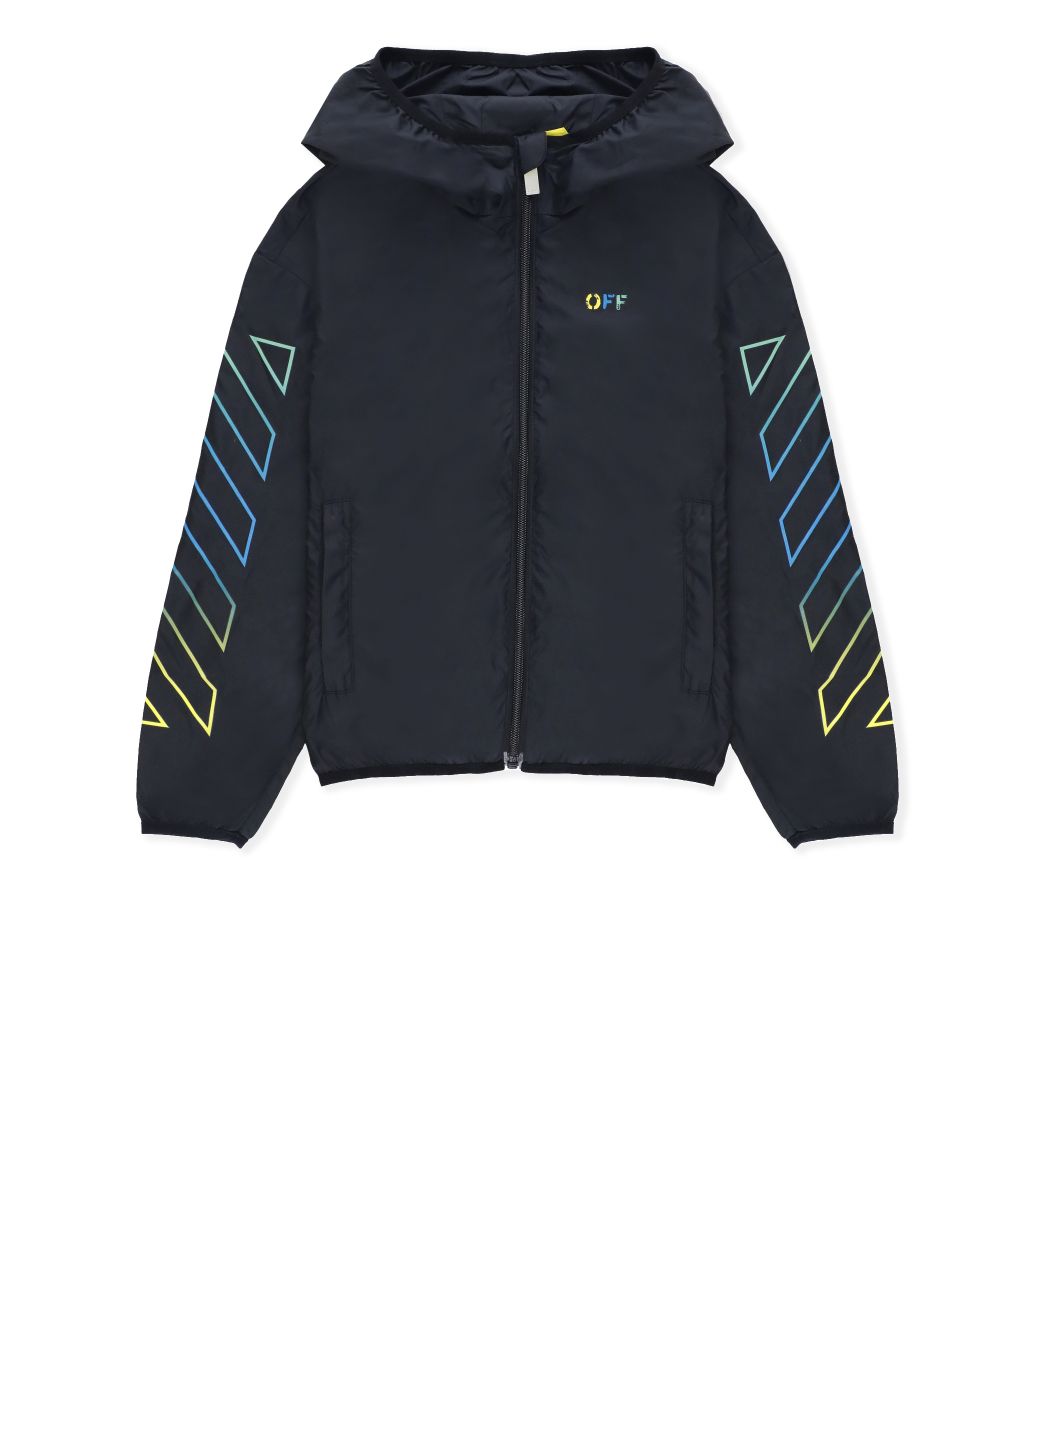 Rainbow Arrow jacket